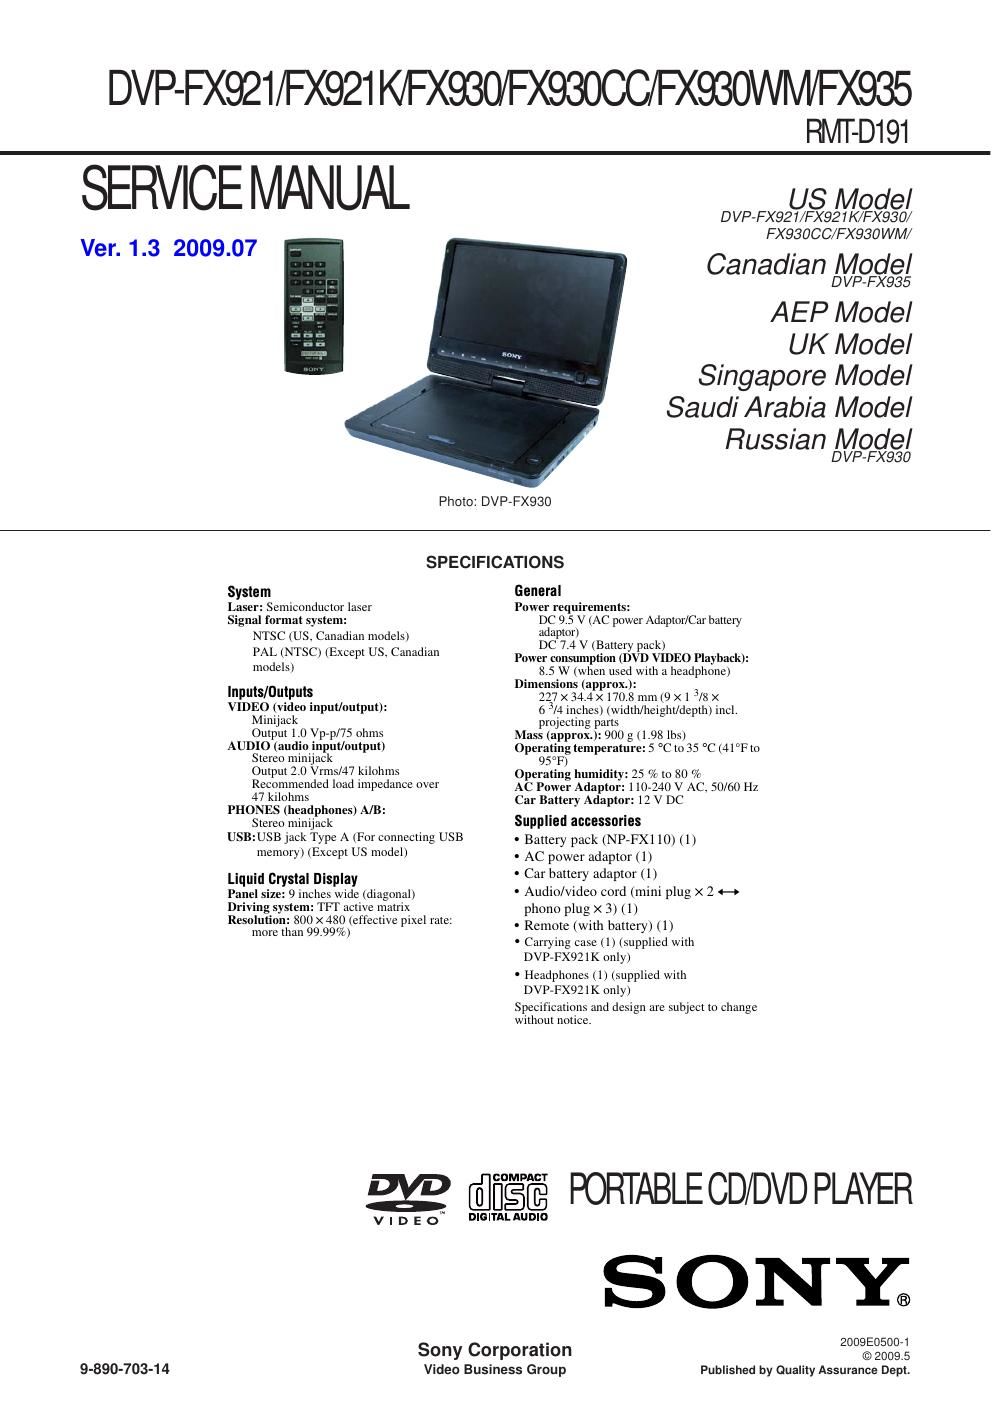 sony dvpfx 930 service manual